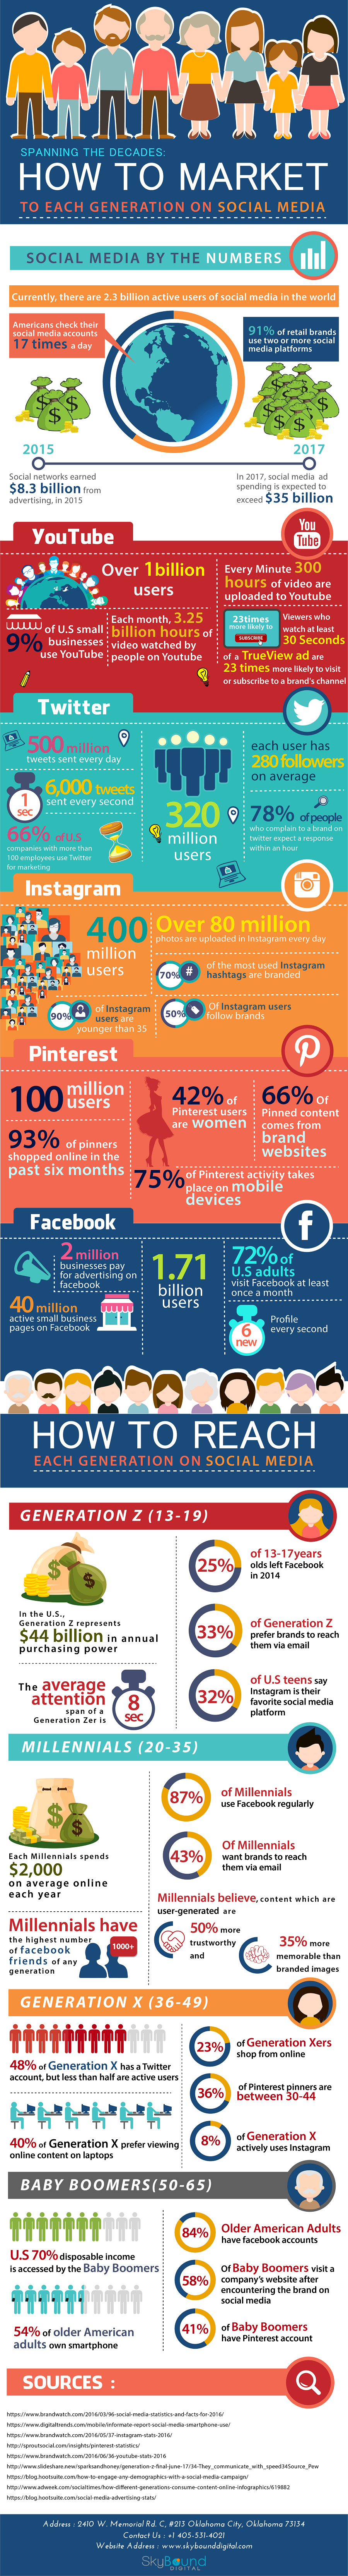 How To Market Each Generation On Social Media